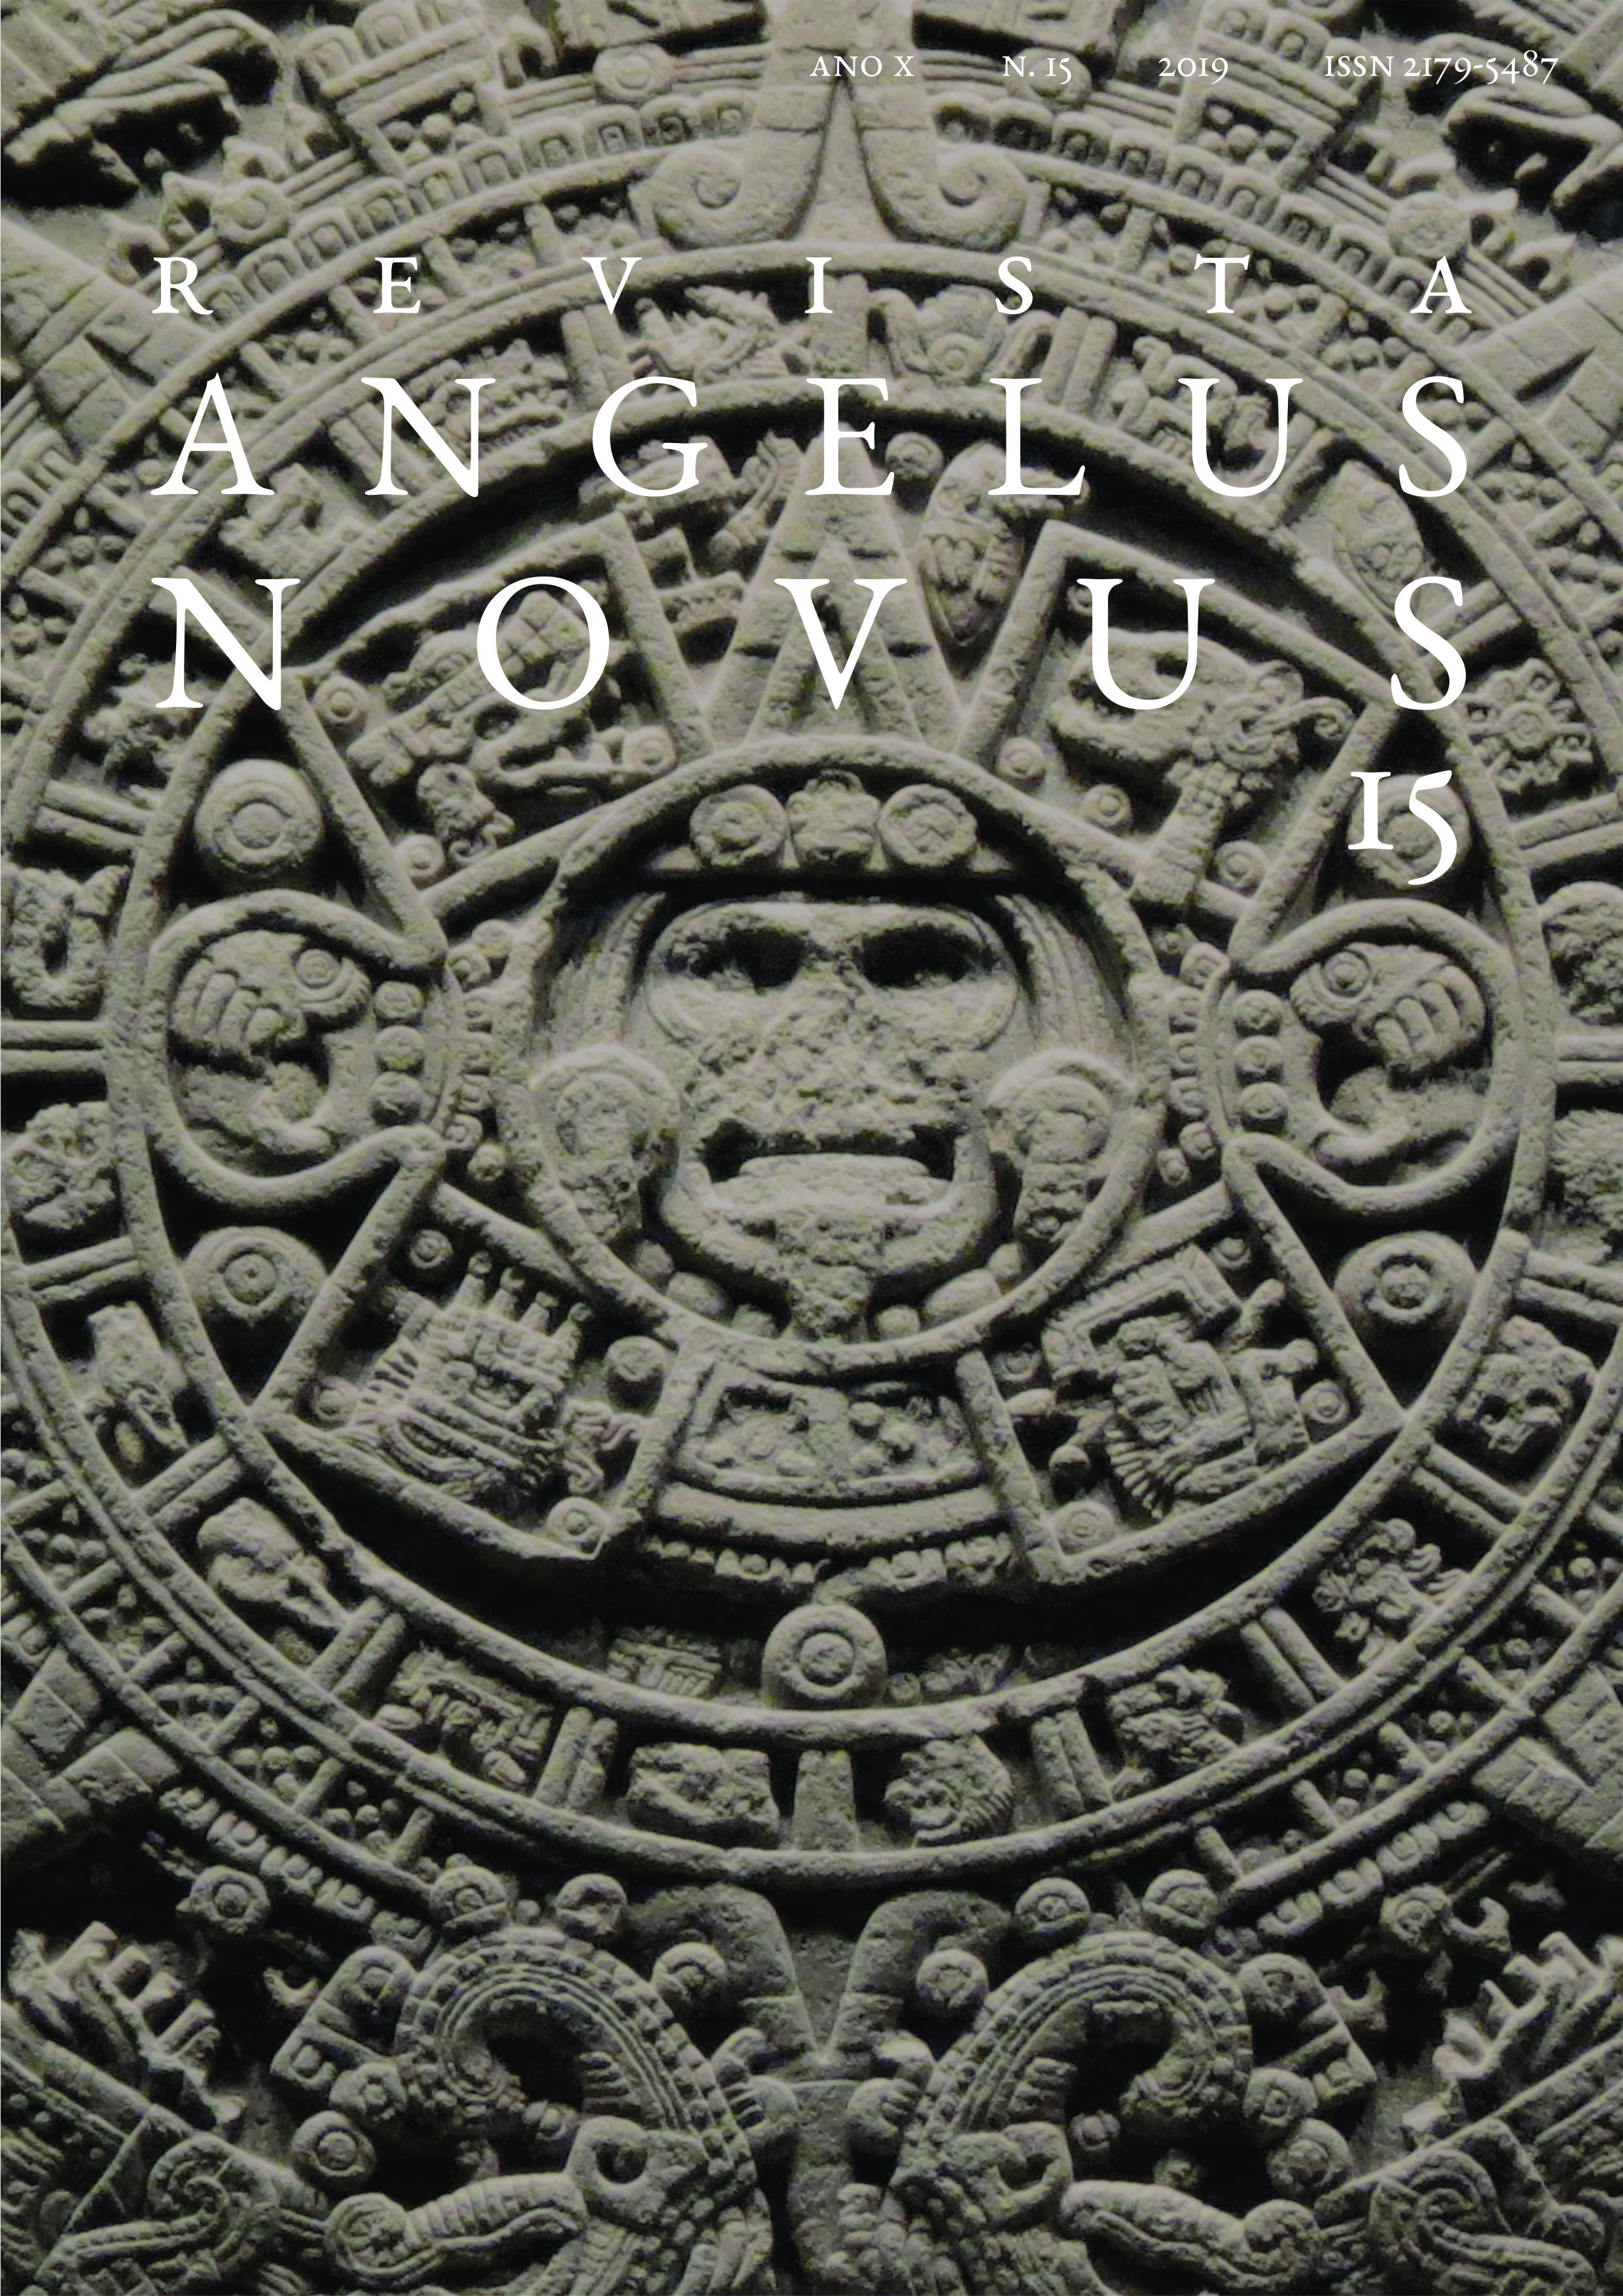 					Ver Núm. 15 (2019): Revista Angelus Novus
				